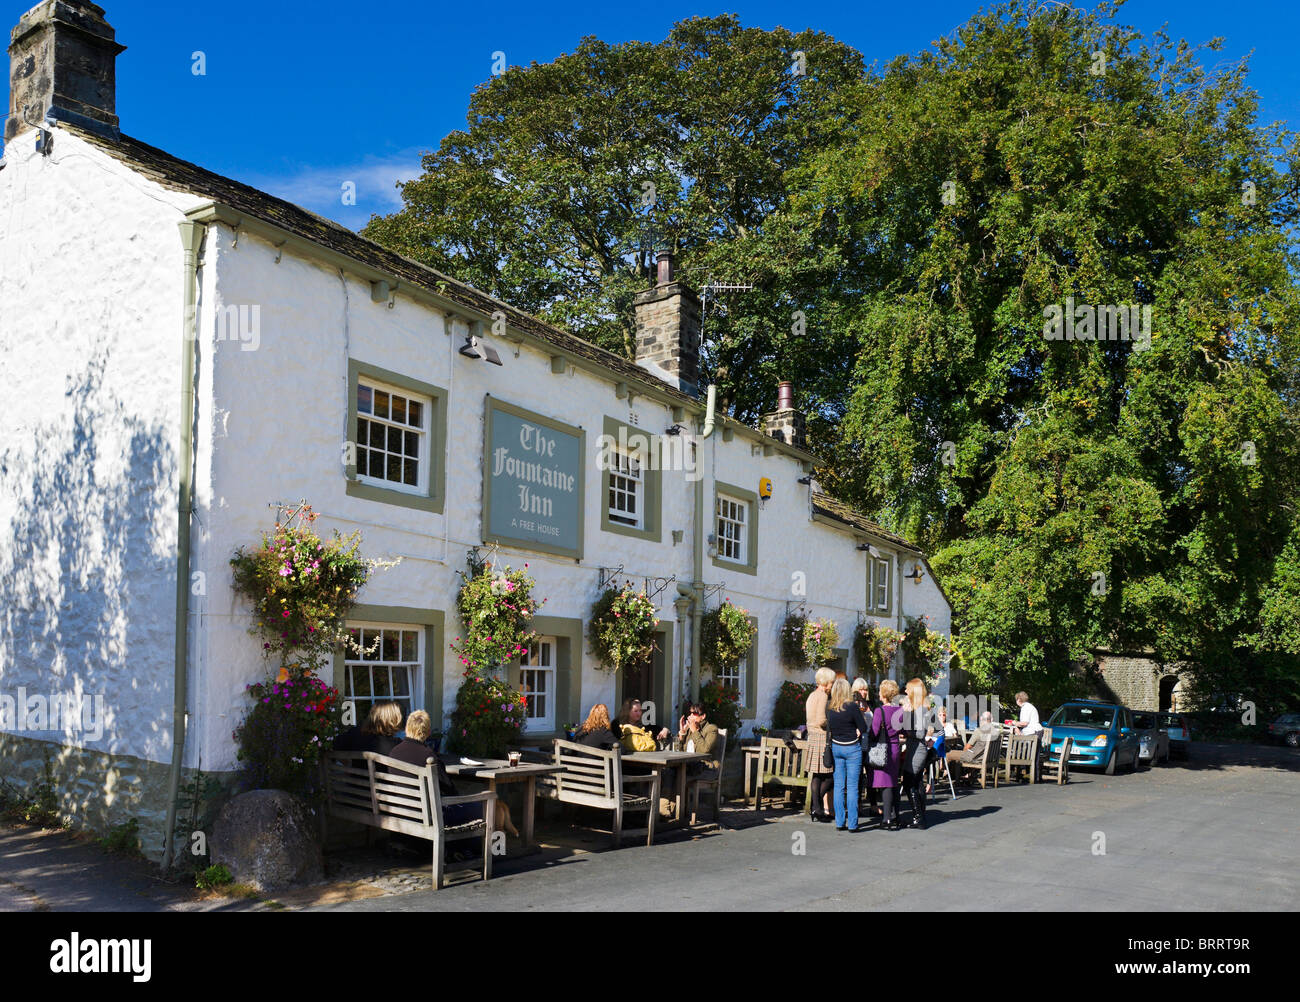 Die Fountaine Inn Pub auf dem Dorfplatz in Linton, nahe Grassington, Upper Wharfedale, Yorkshire Dales, England, UK Stockfoto